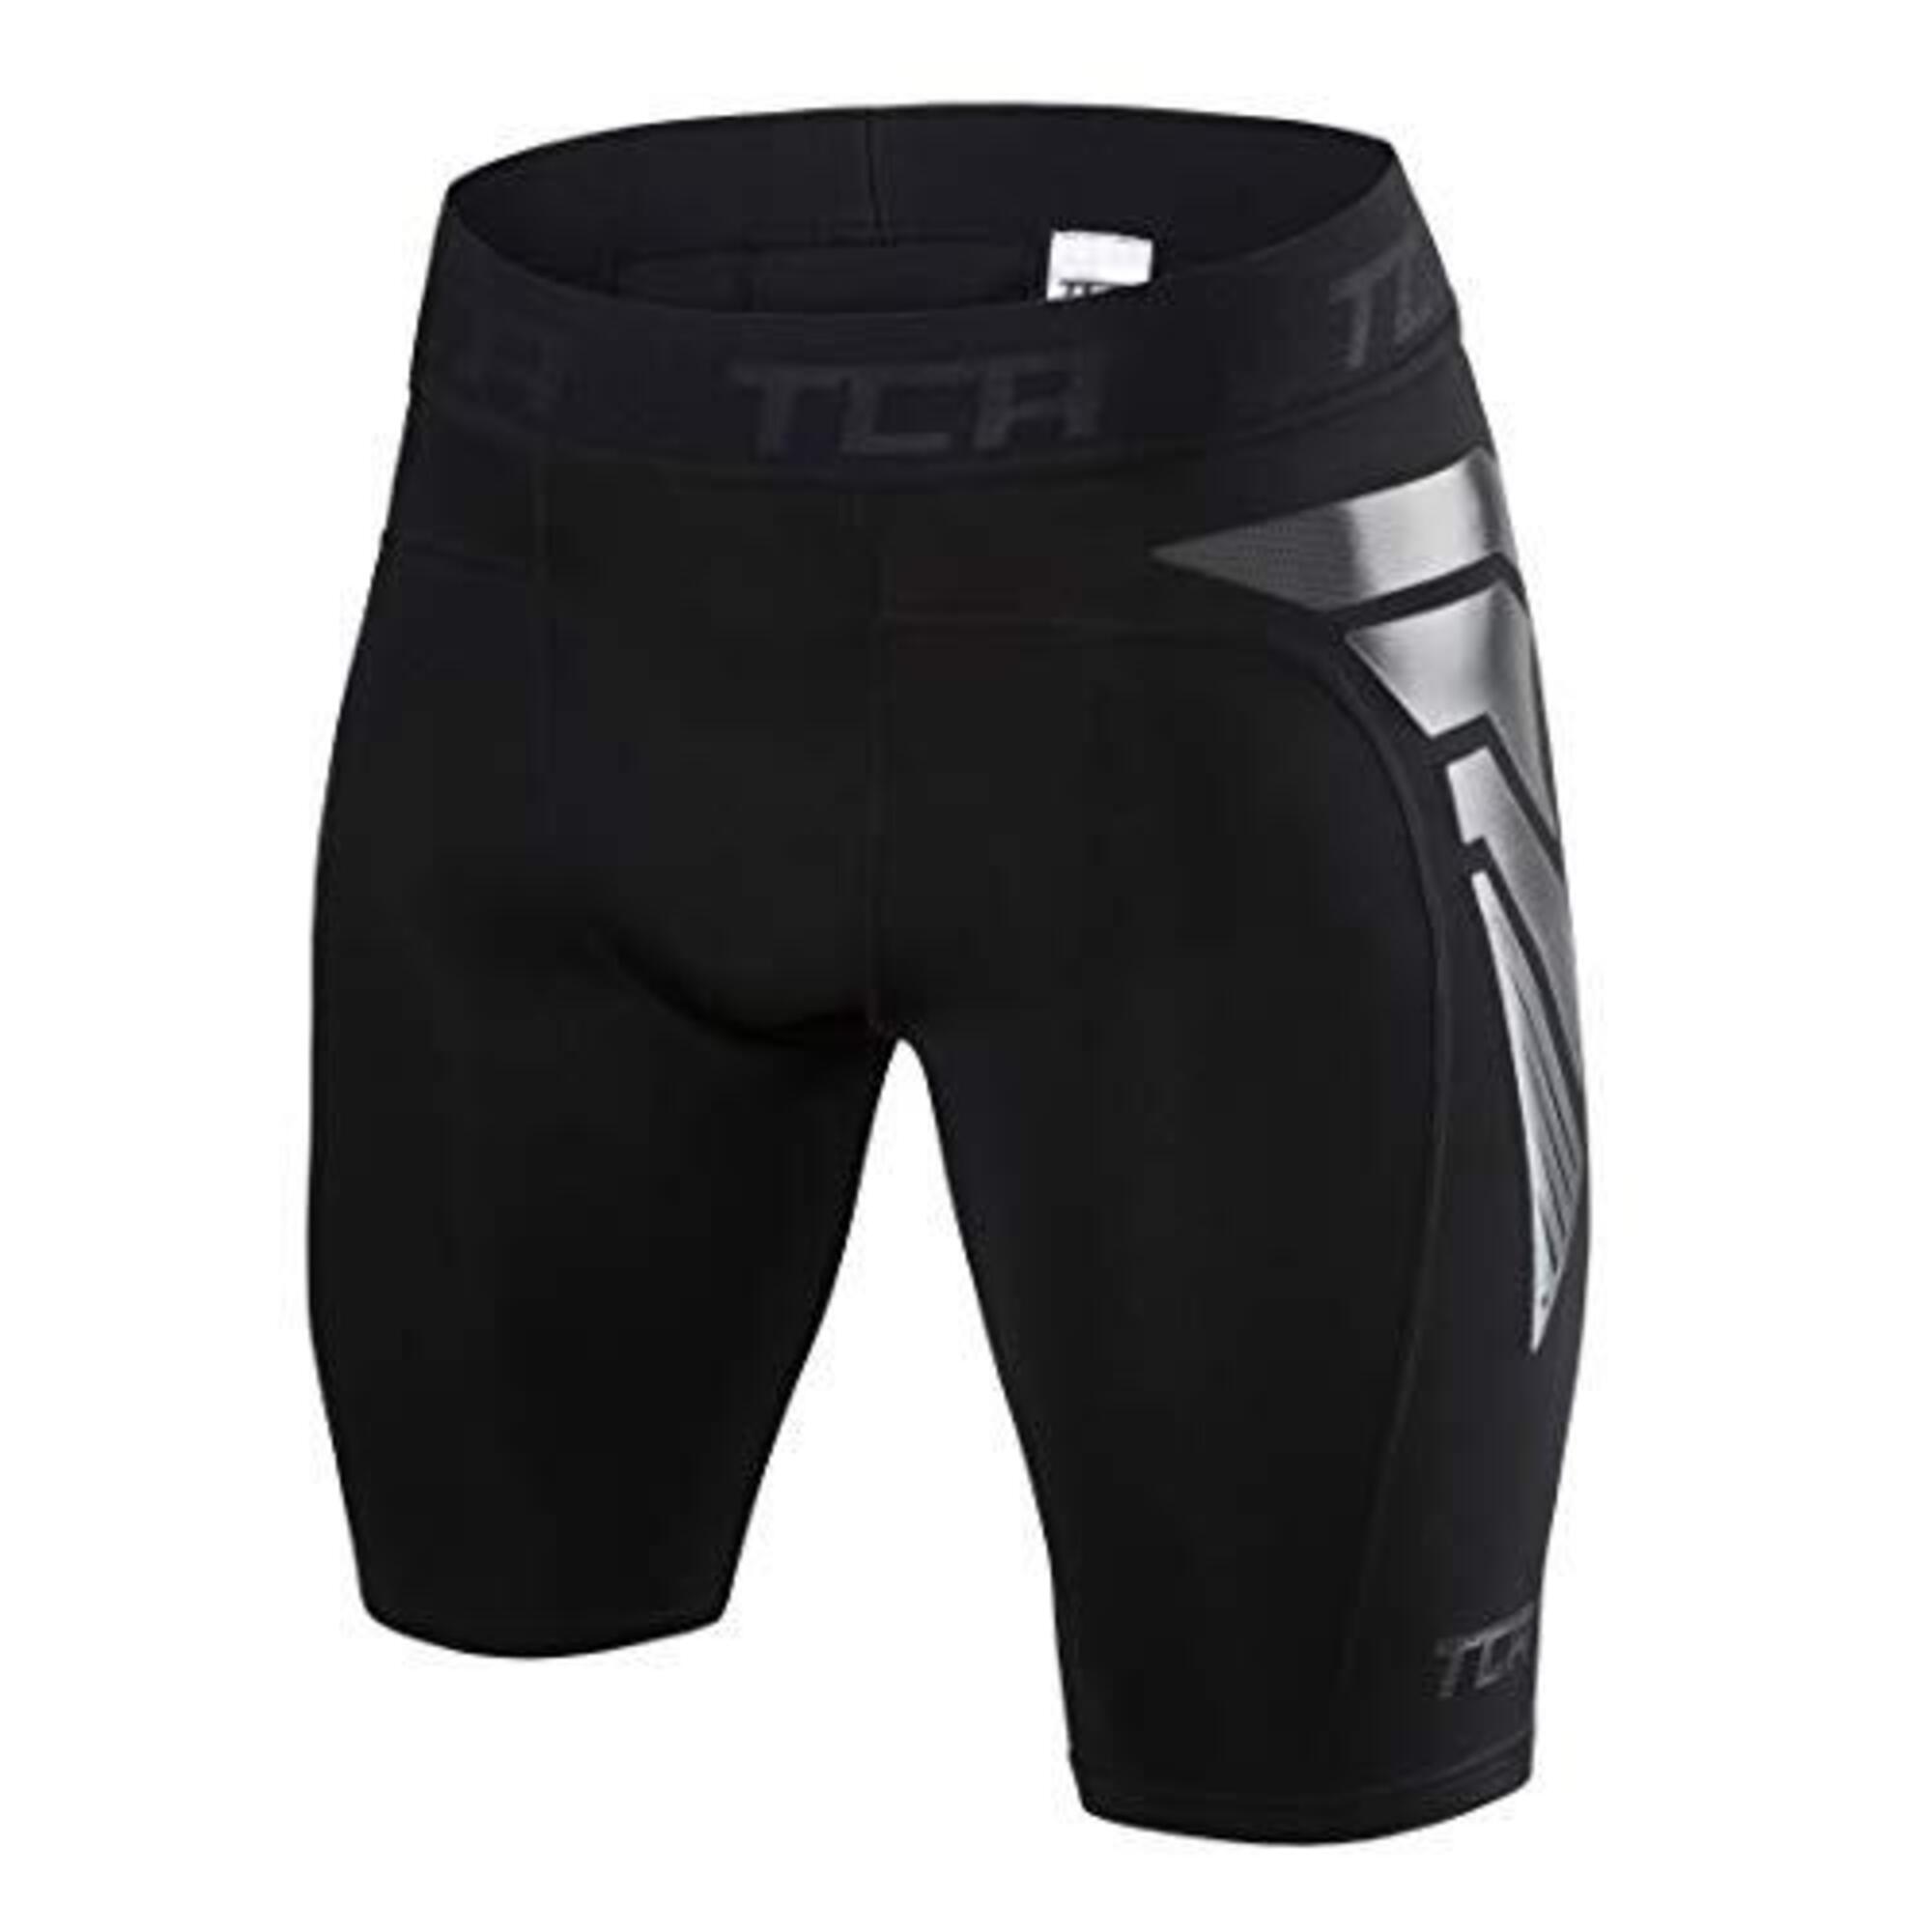 TCA Men's CarbonForce Quick Dry Base Layer Compression Shorts - Black Stealth